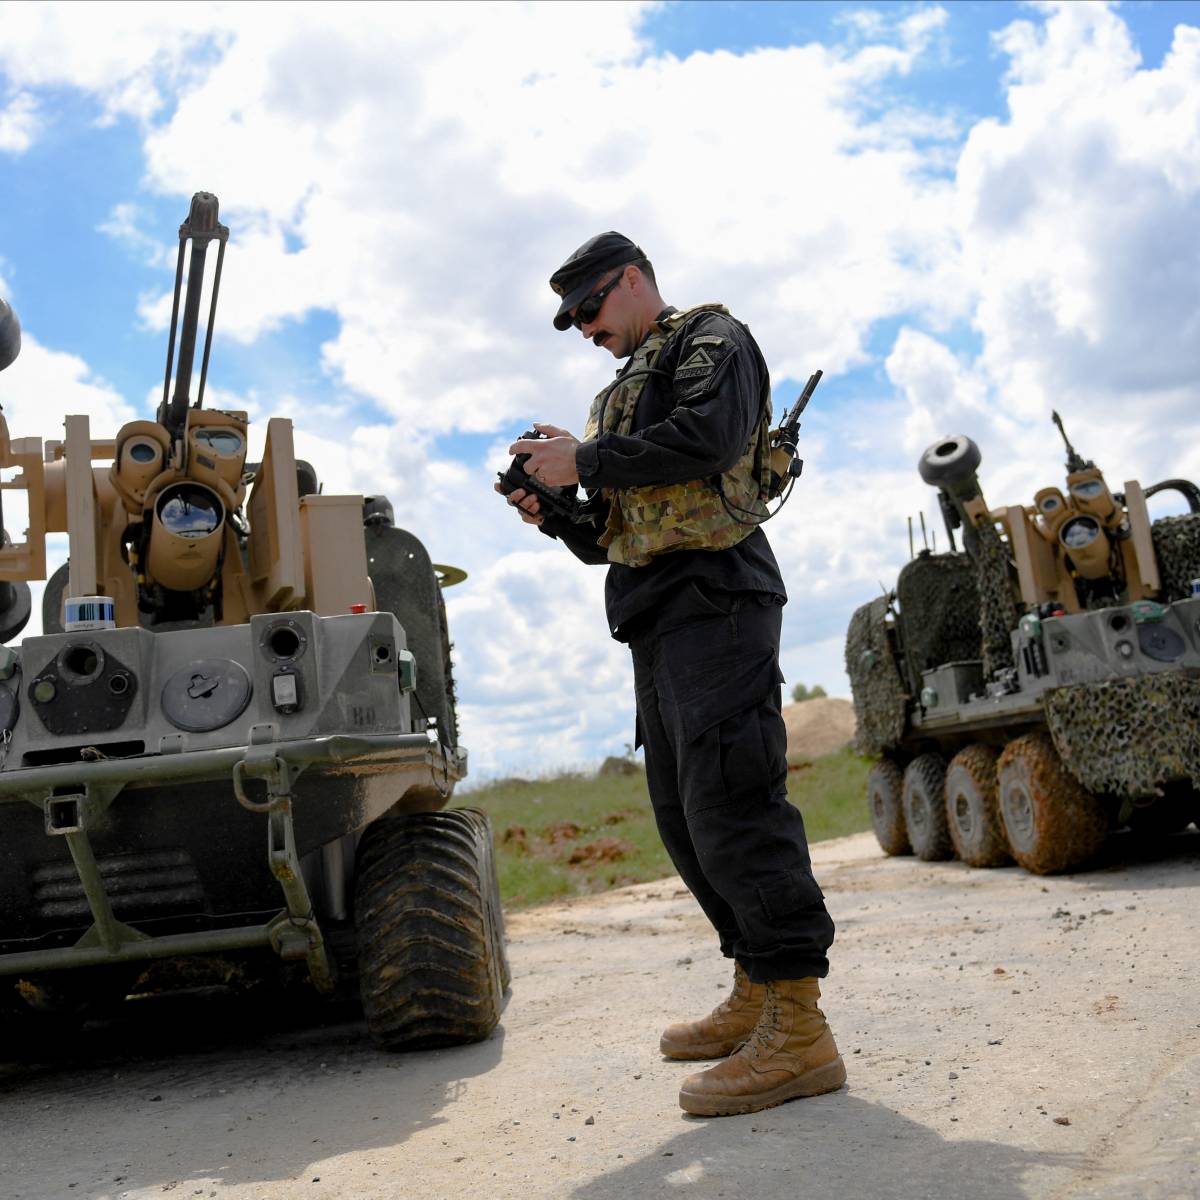 Le Monde бьёт тревогу: Киев опустошил западные арсеналы